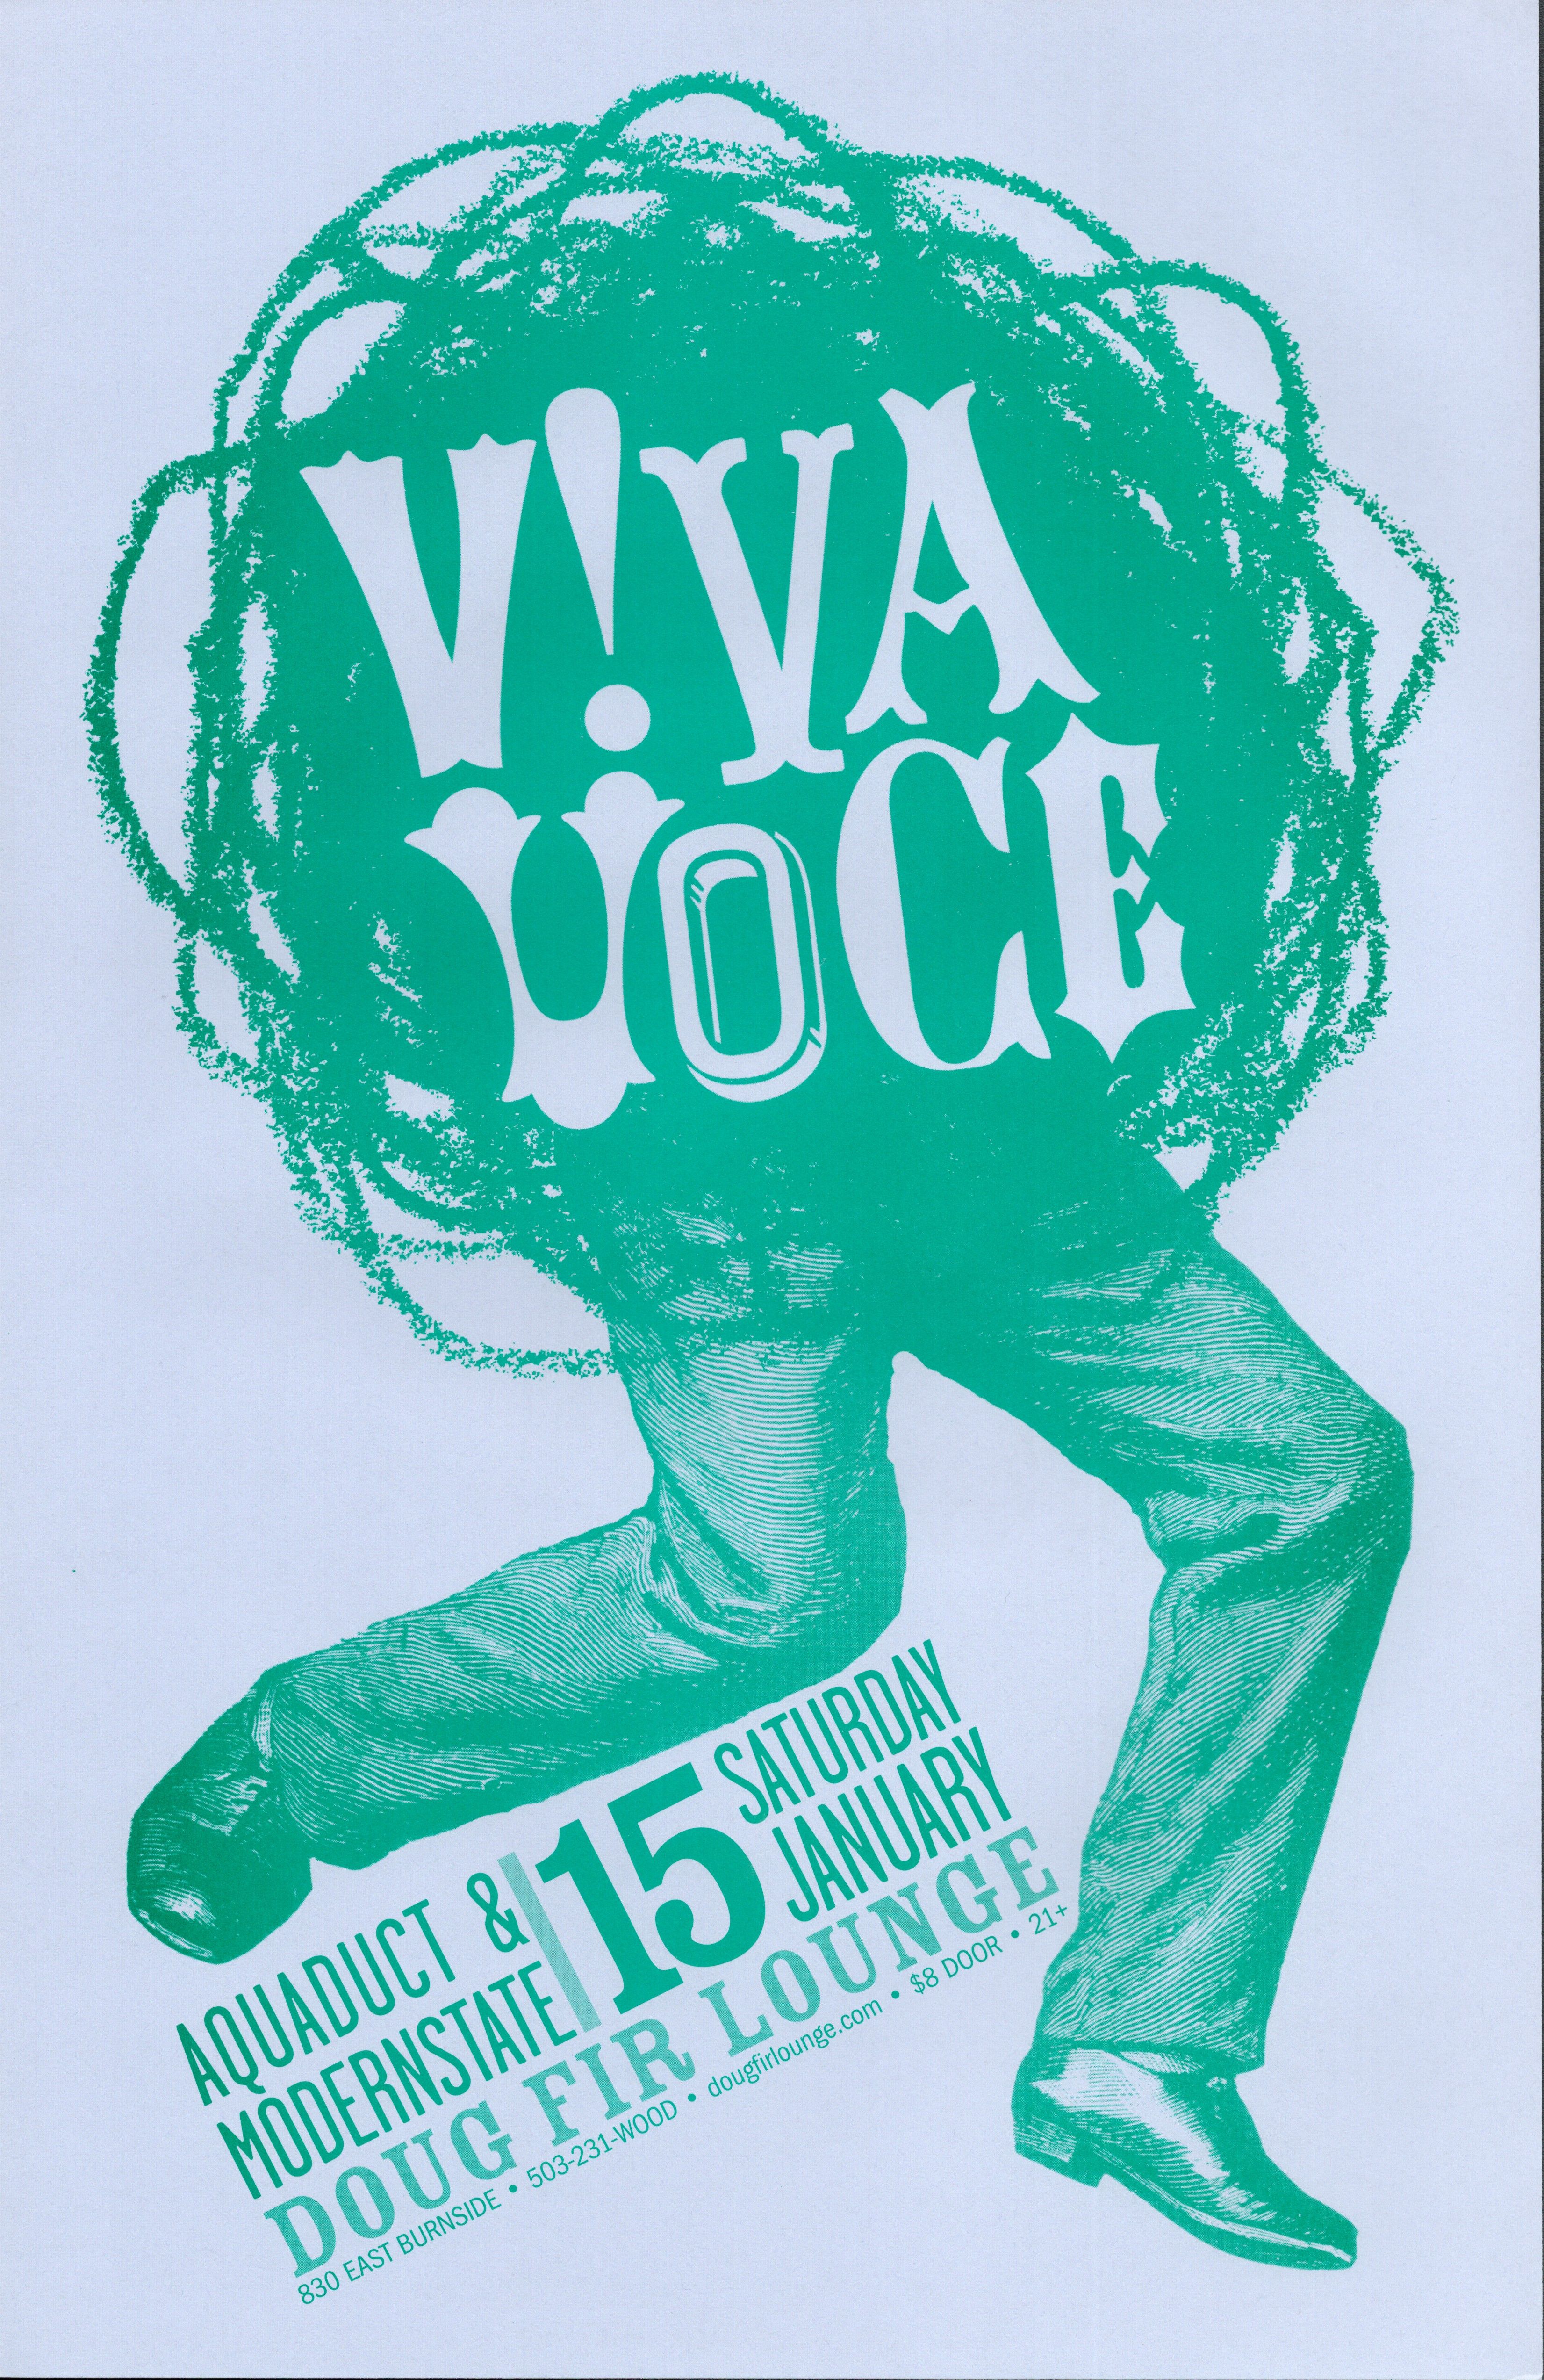 MXP-206.6 Viva Voce Doug Fir 2005 Concert Poster